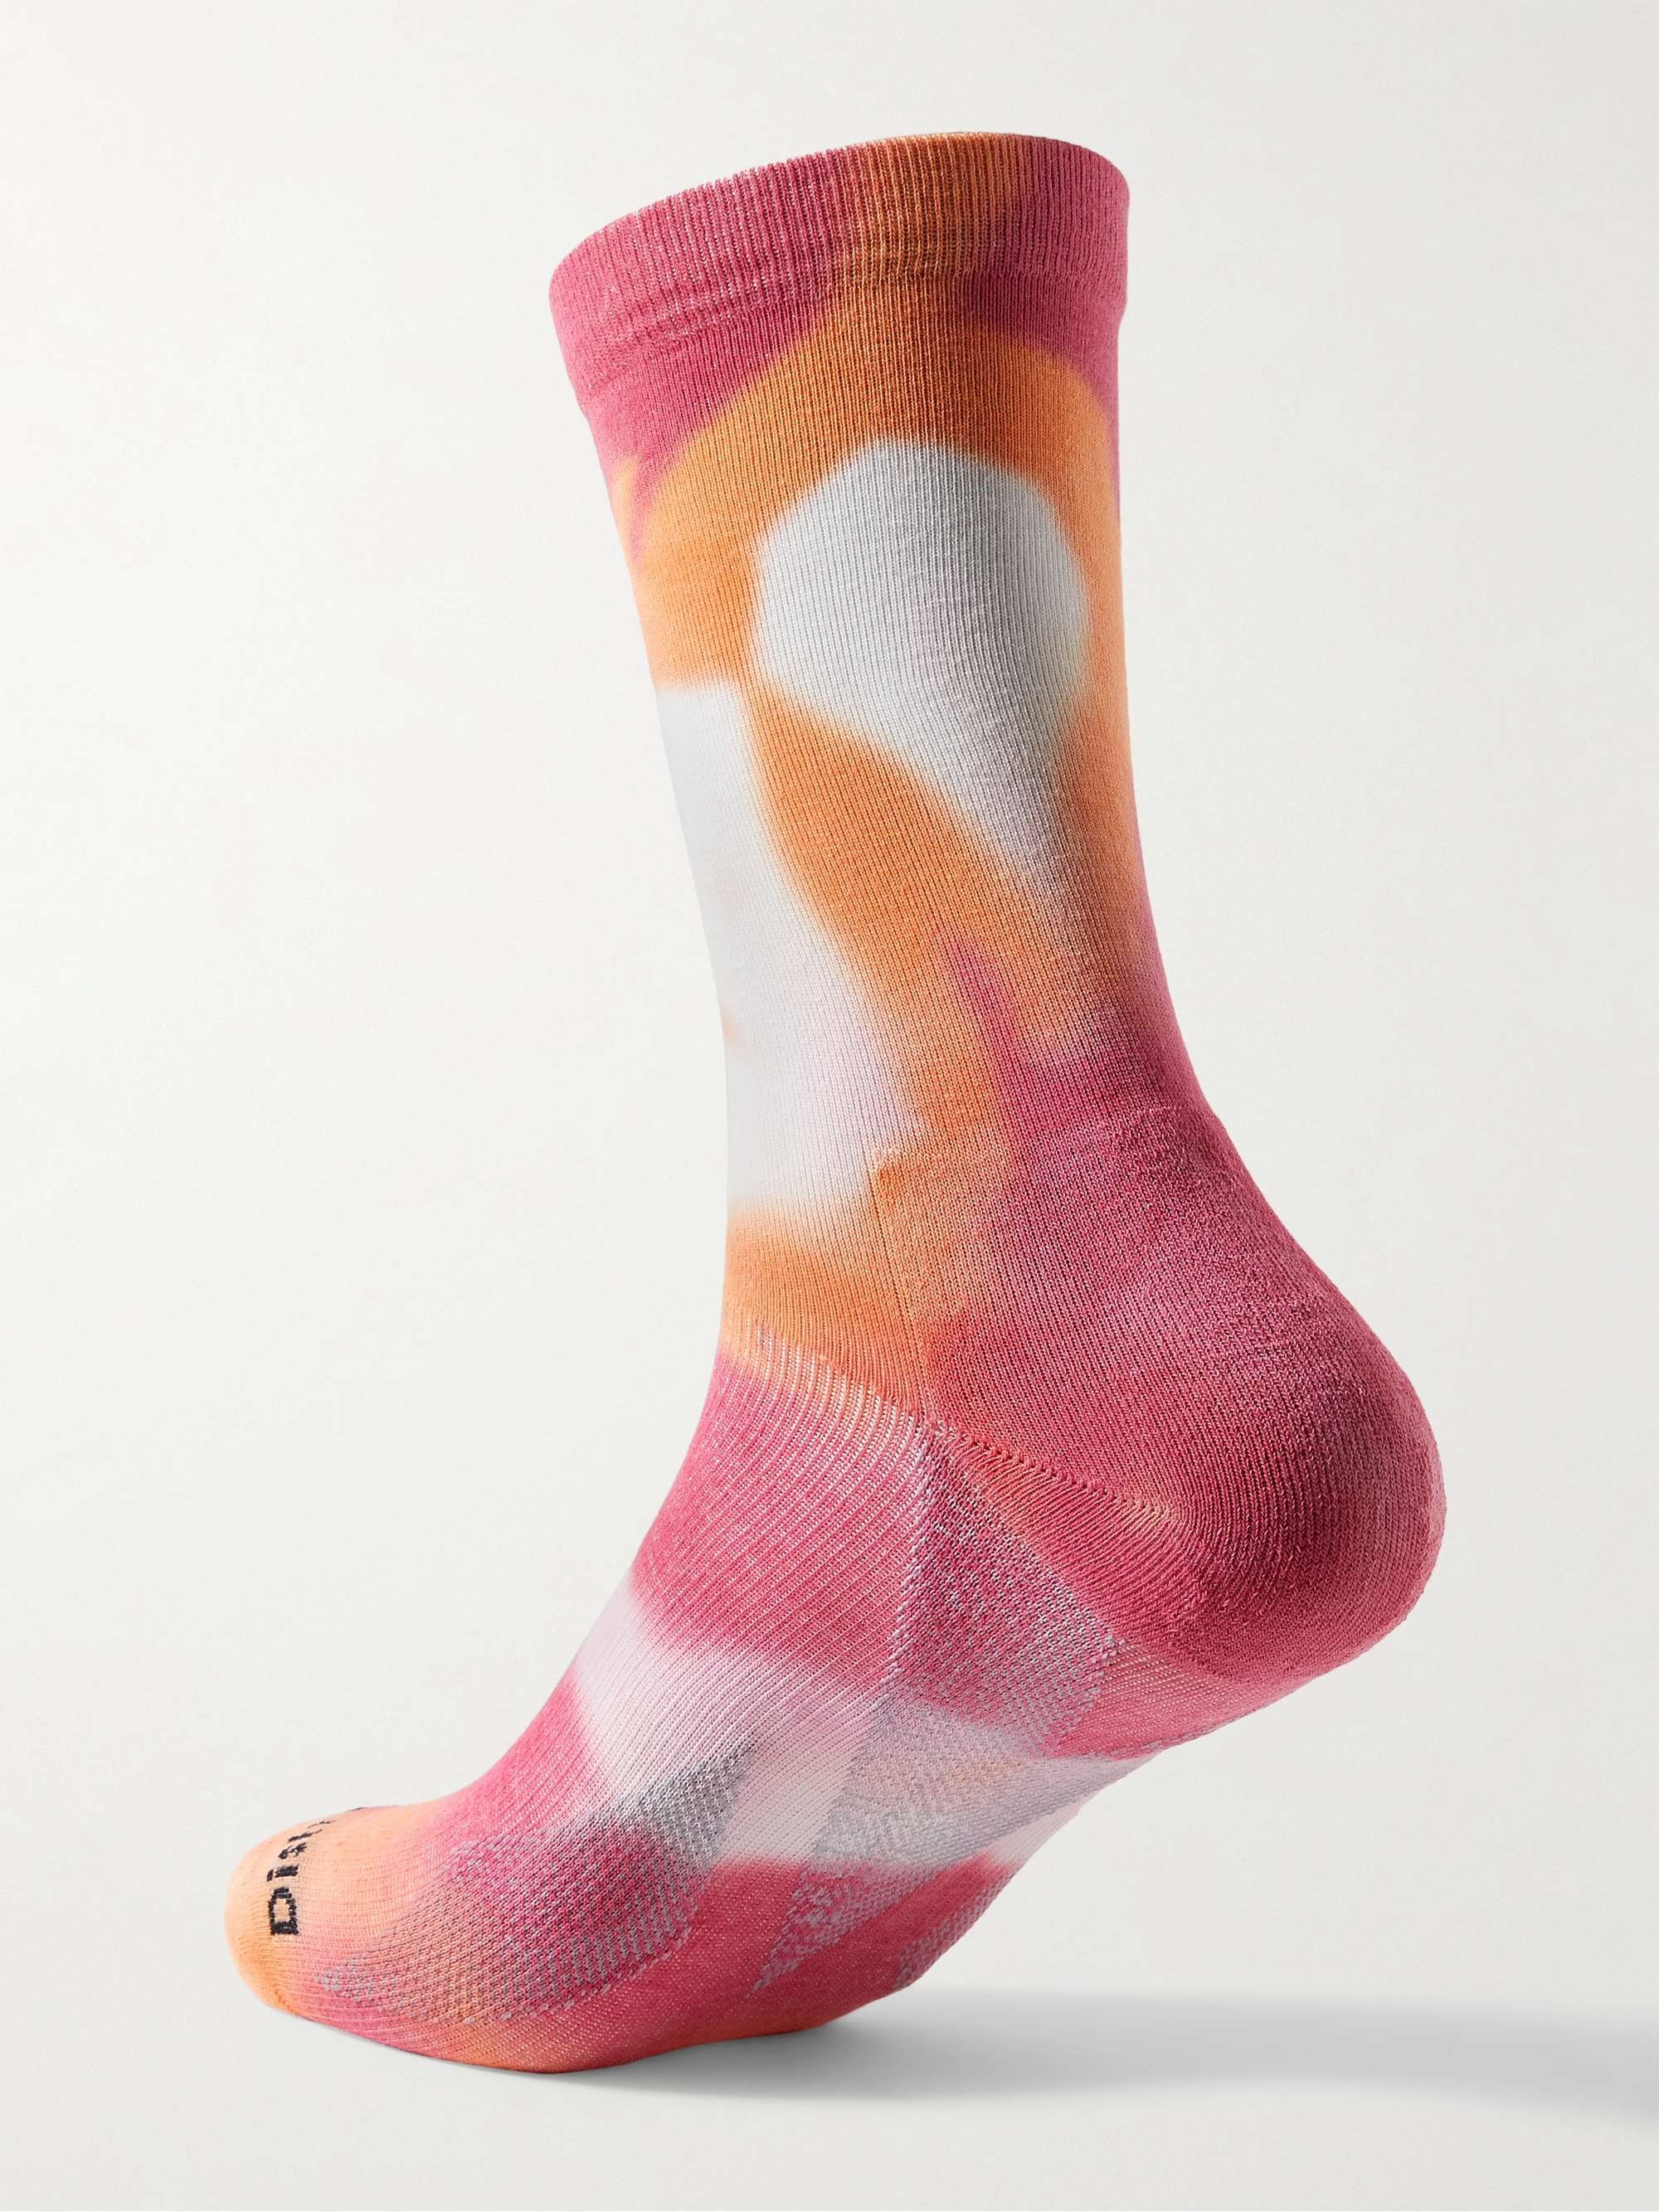 DISTRICT VISION Yoshi Tie-Dyed Cotton-Blend Socks